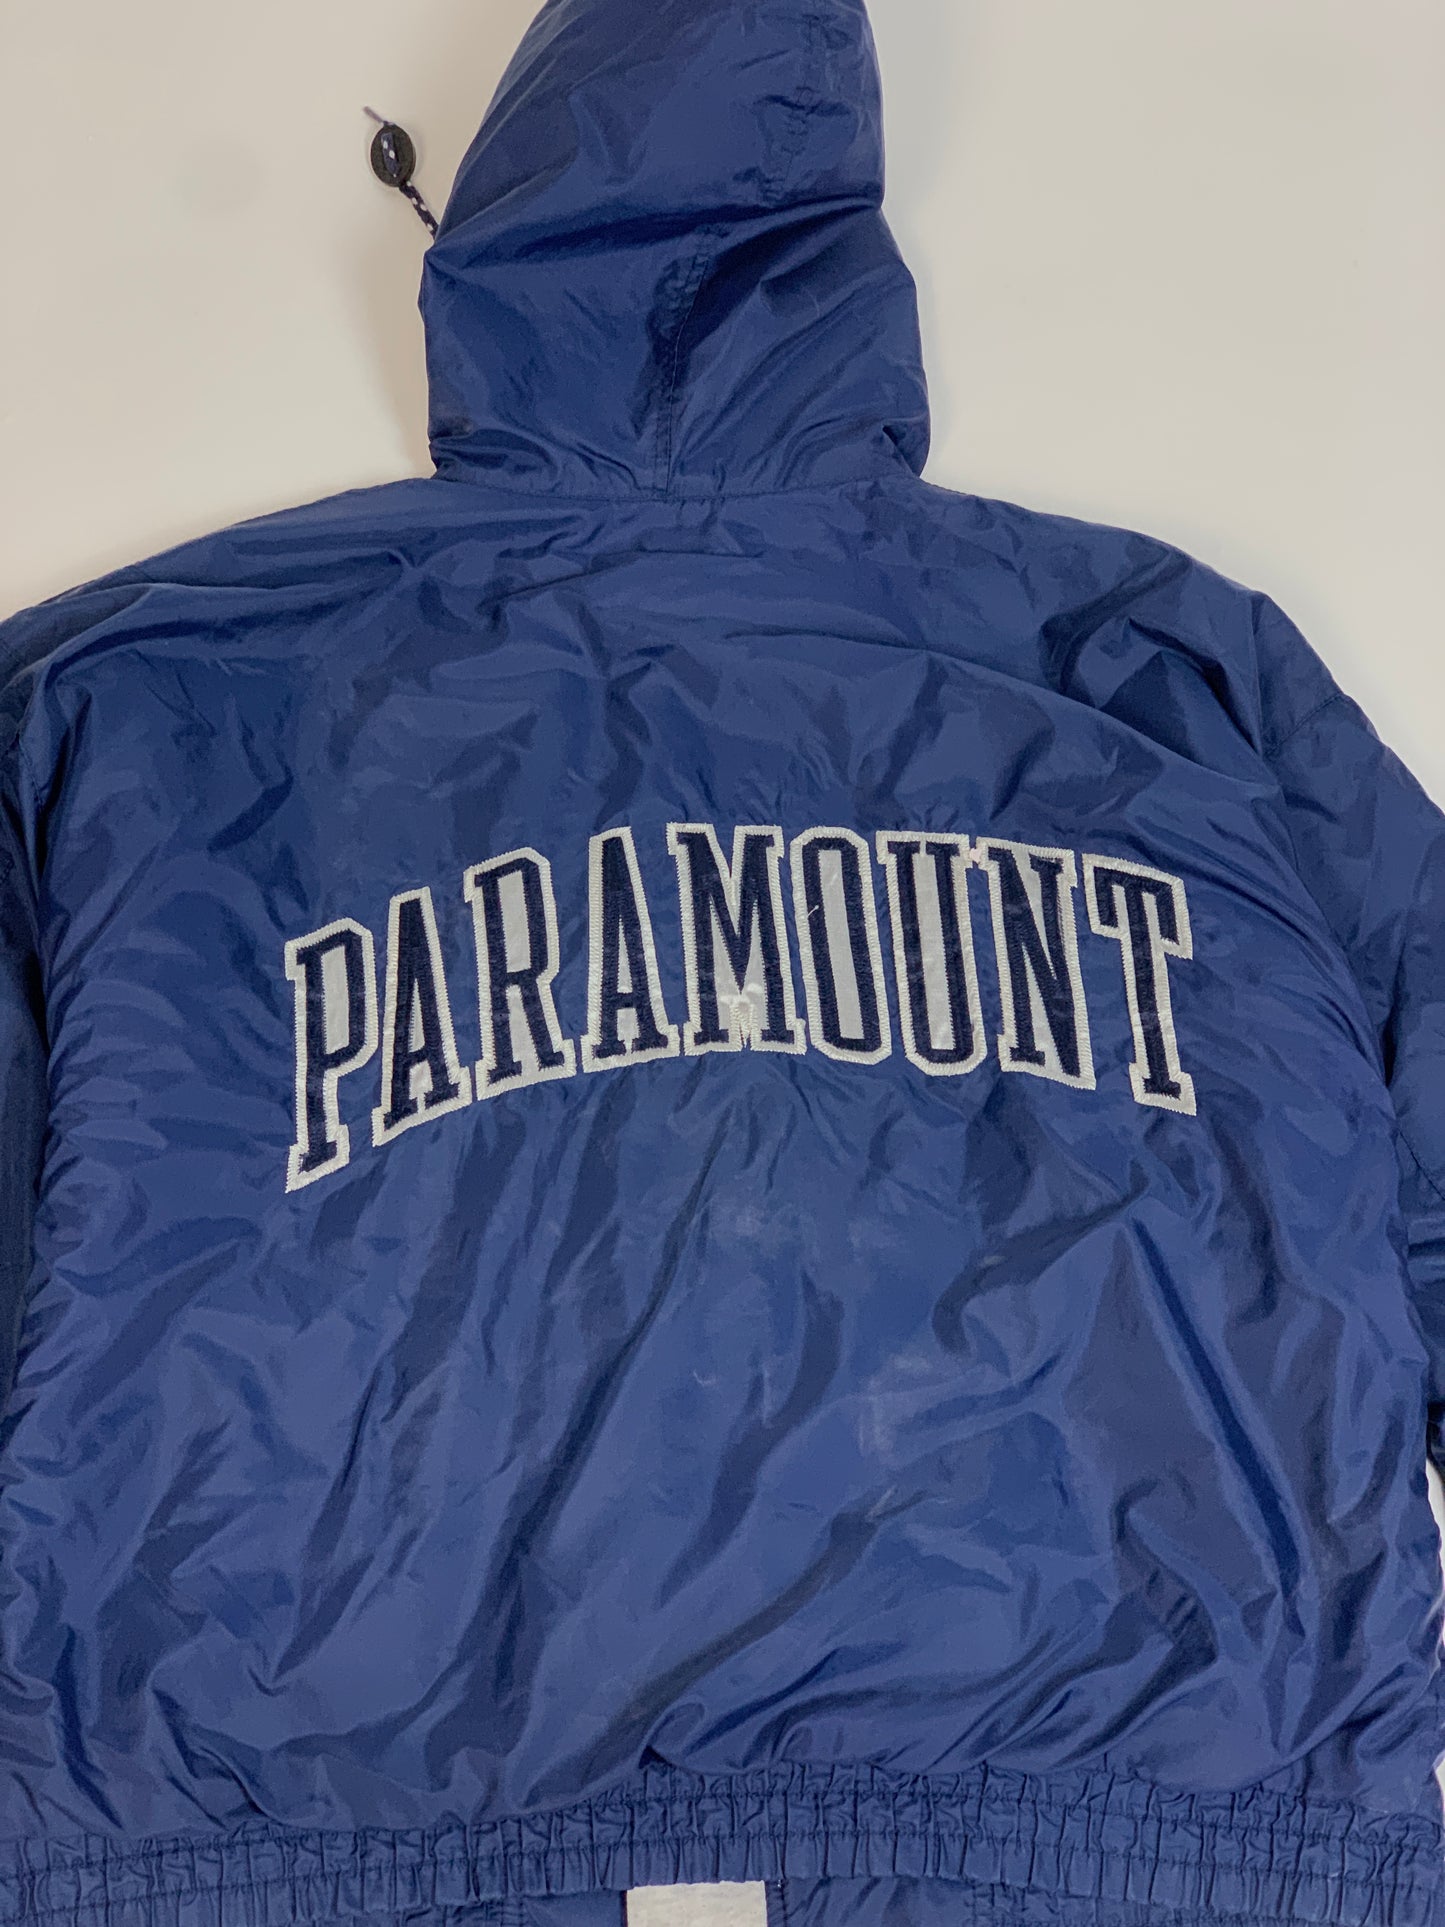 Paramount Windbreaker Jacket - M